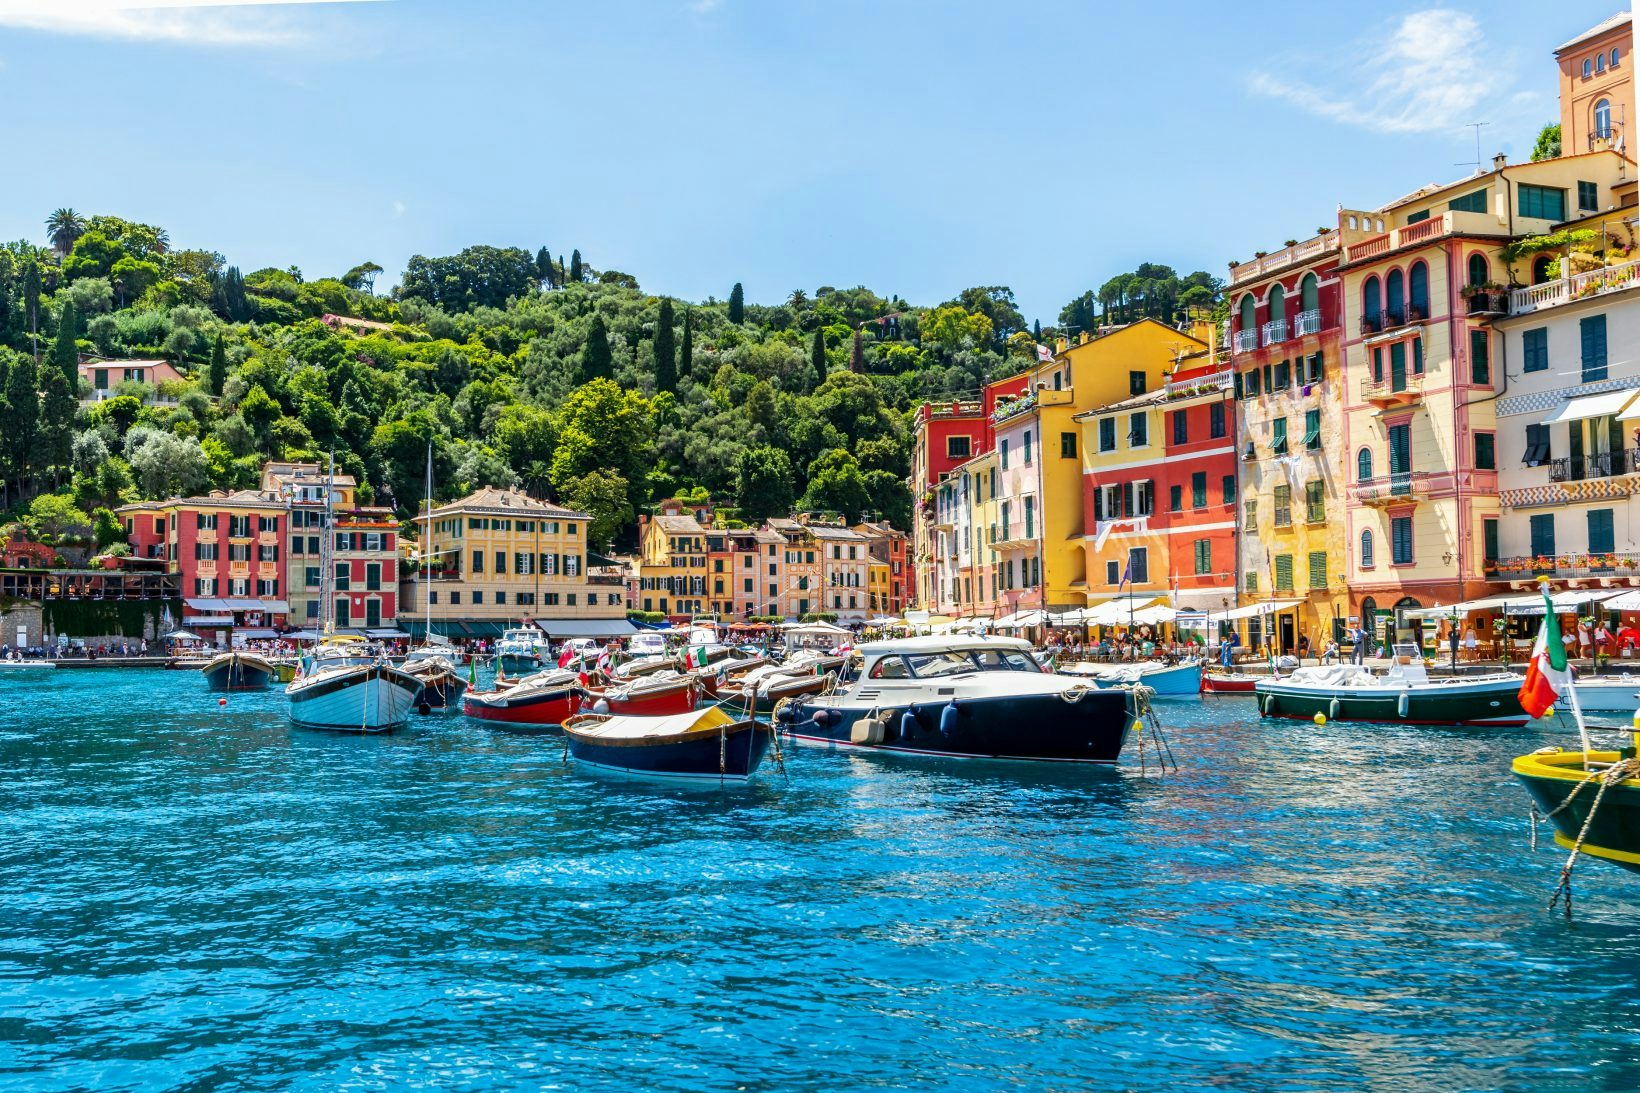 Portofino is attracting powerful investors